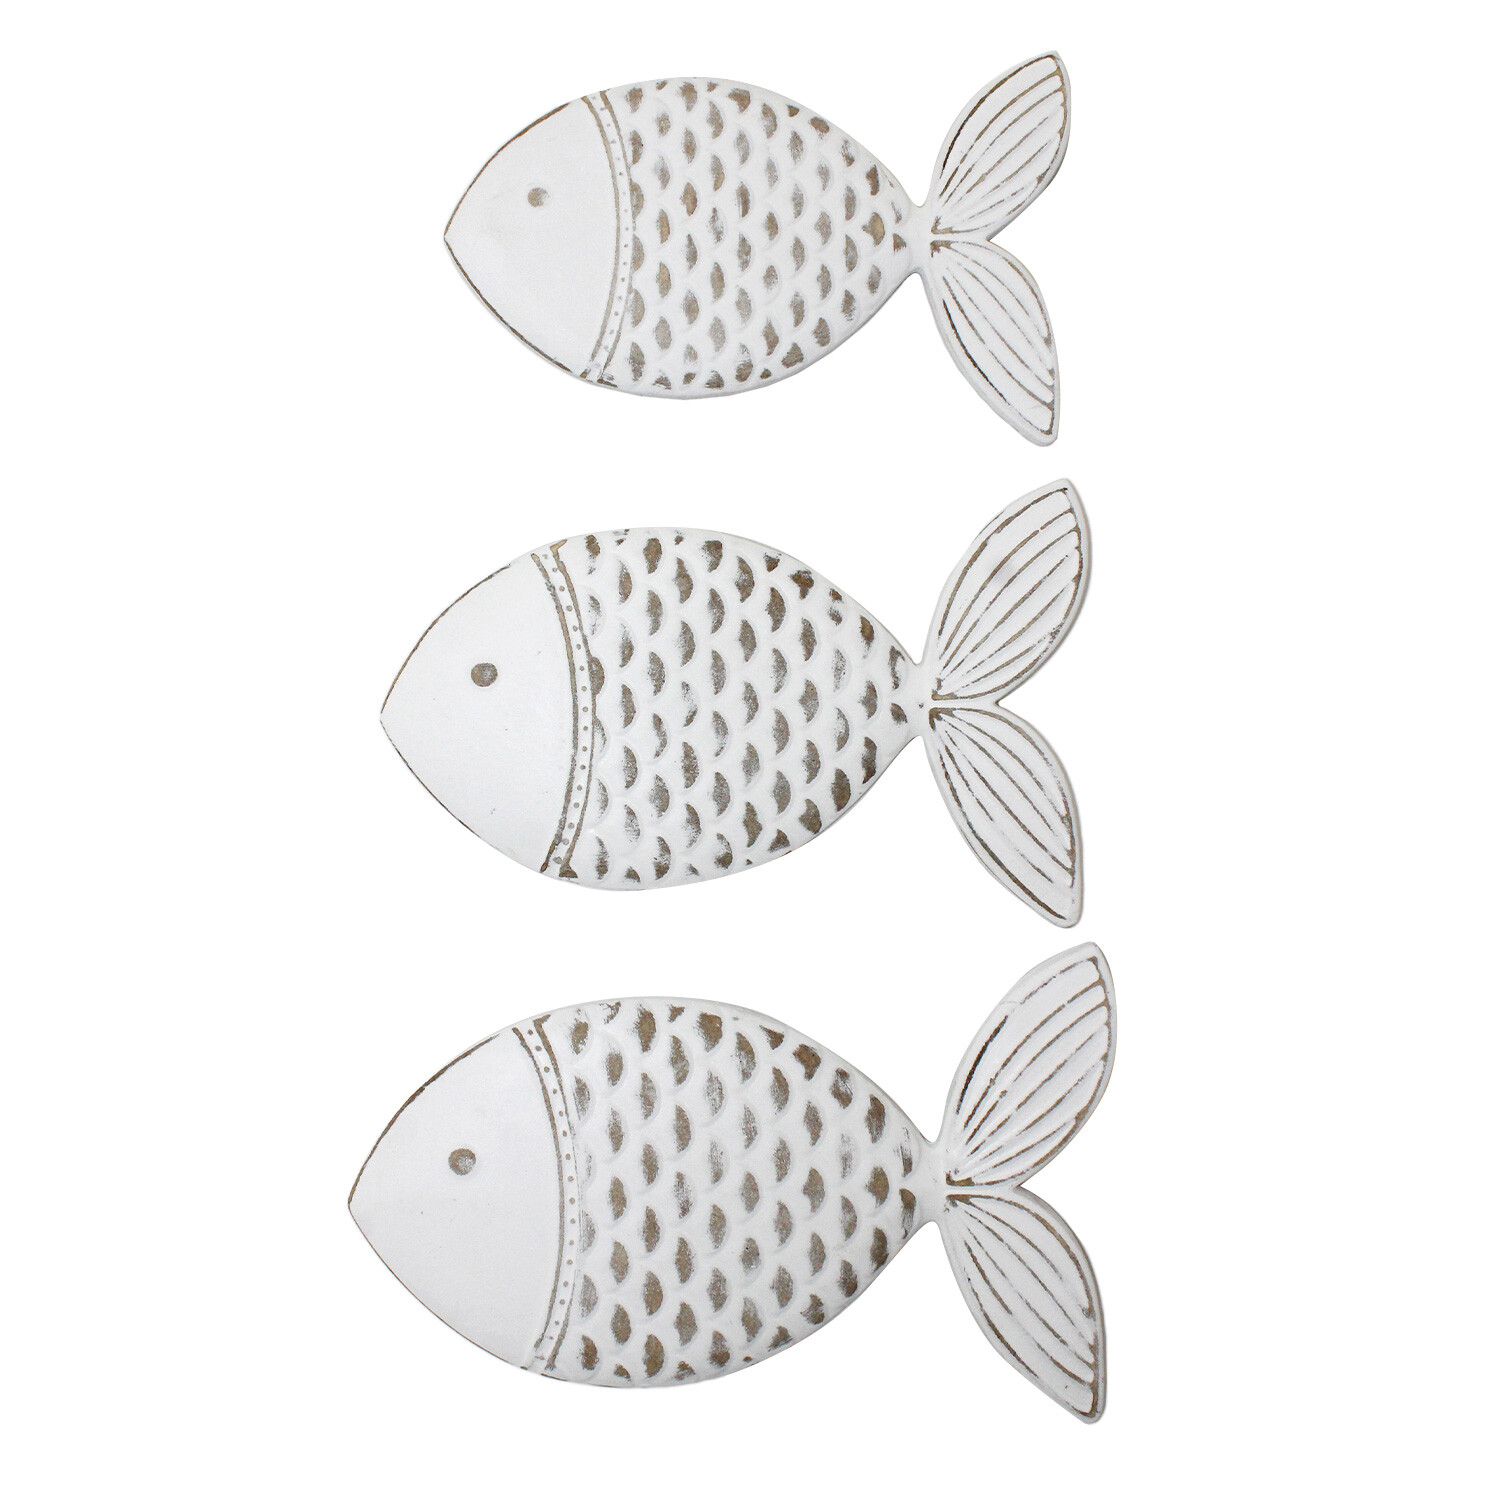 Set of 3 Rustic Fish Wall Art - White Image 1